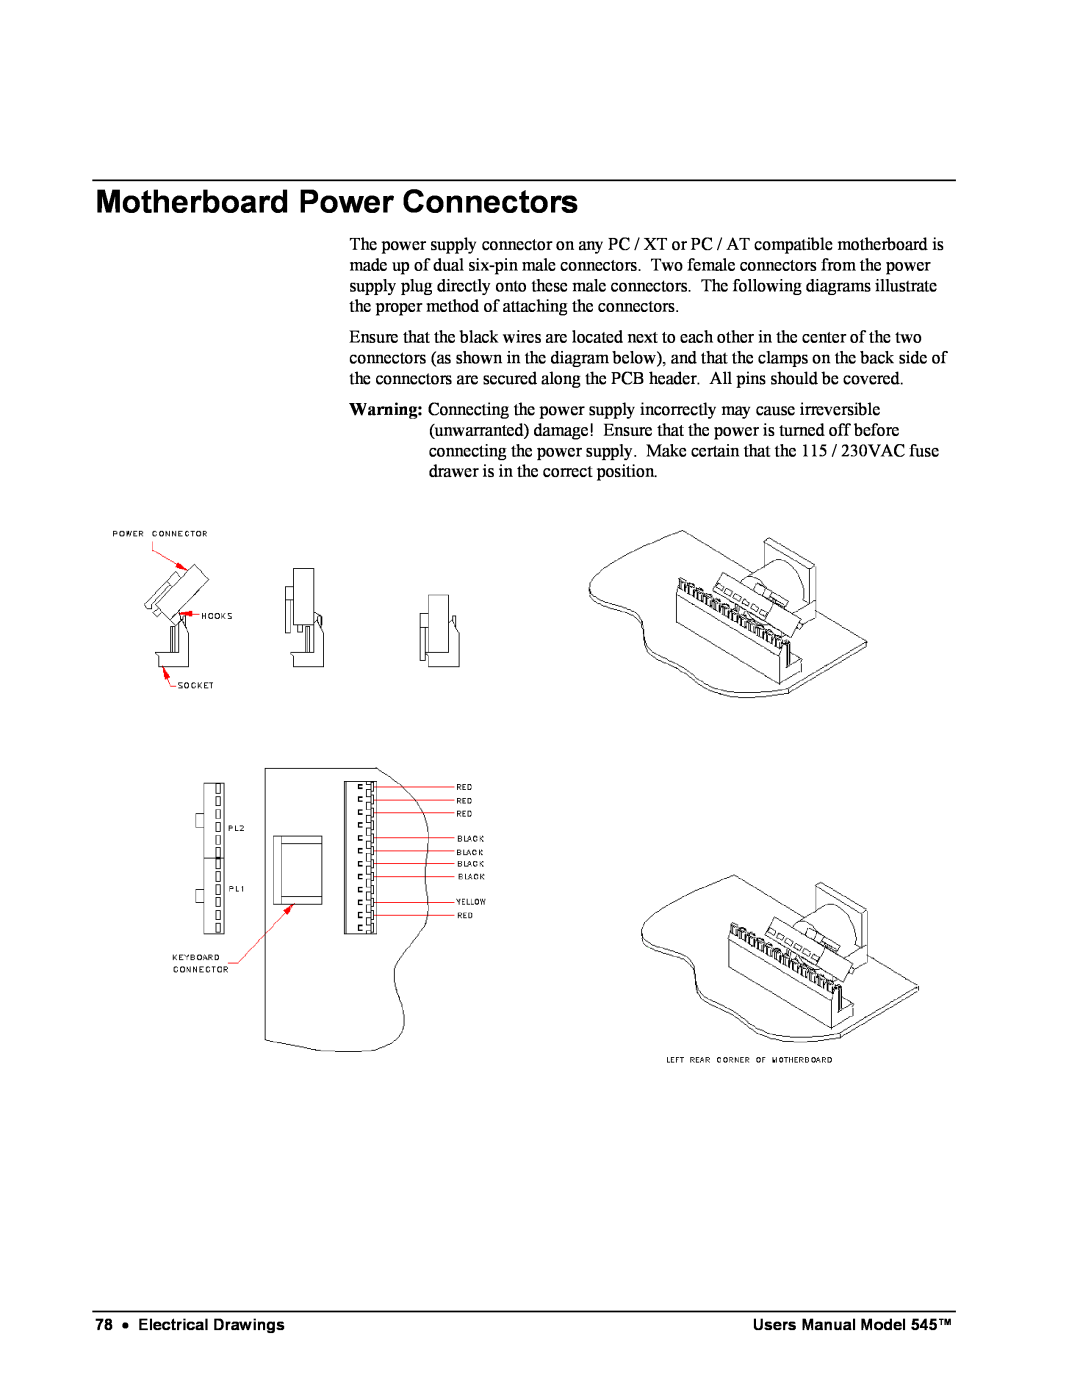 Paxar 545 user manual Motherboard Power Connectors 